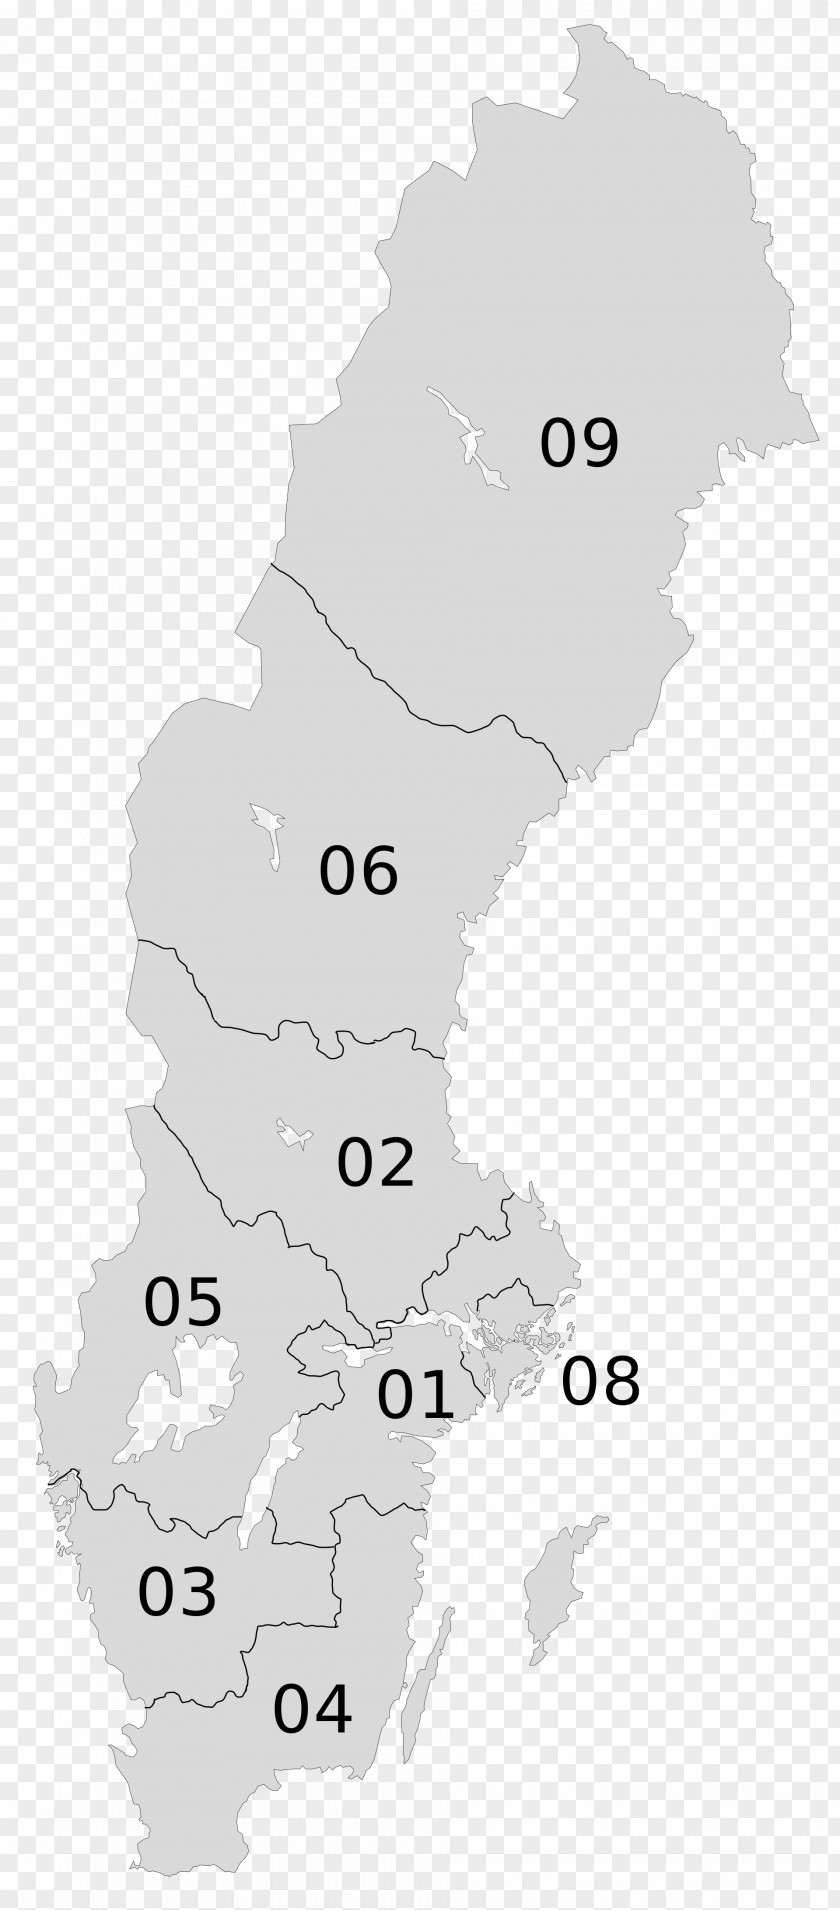 Sweden NUTS Statistical Regions Of Lands Swedish Nomenclature Territorial Units For Statistics East PNG